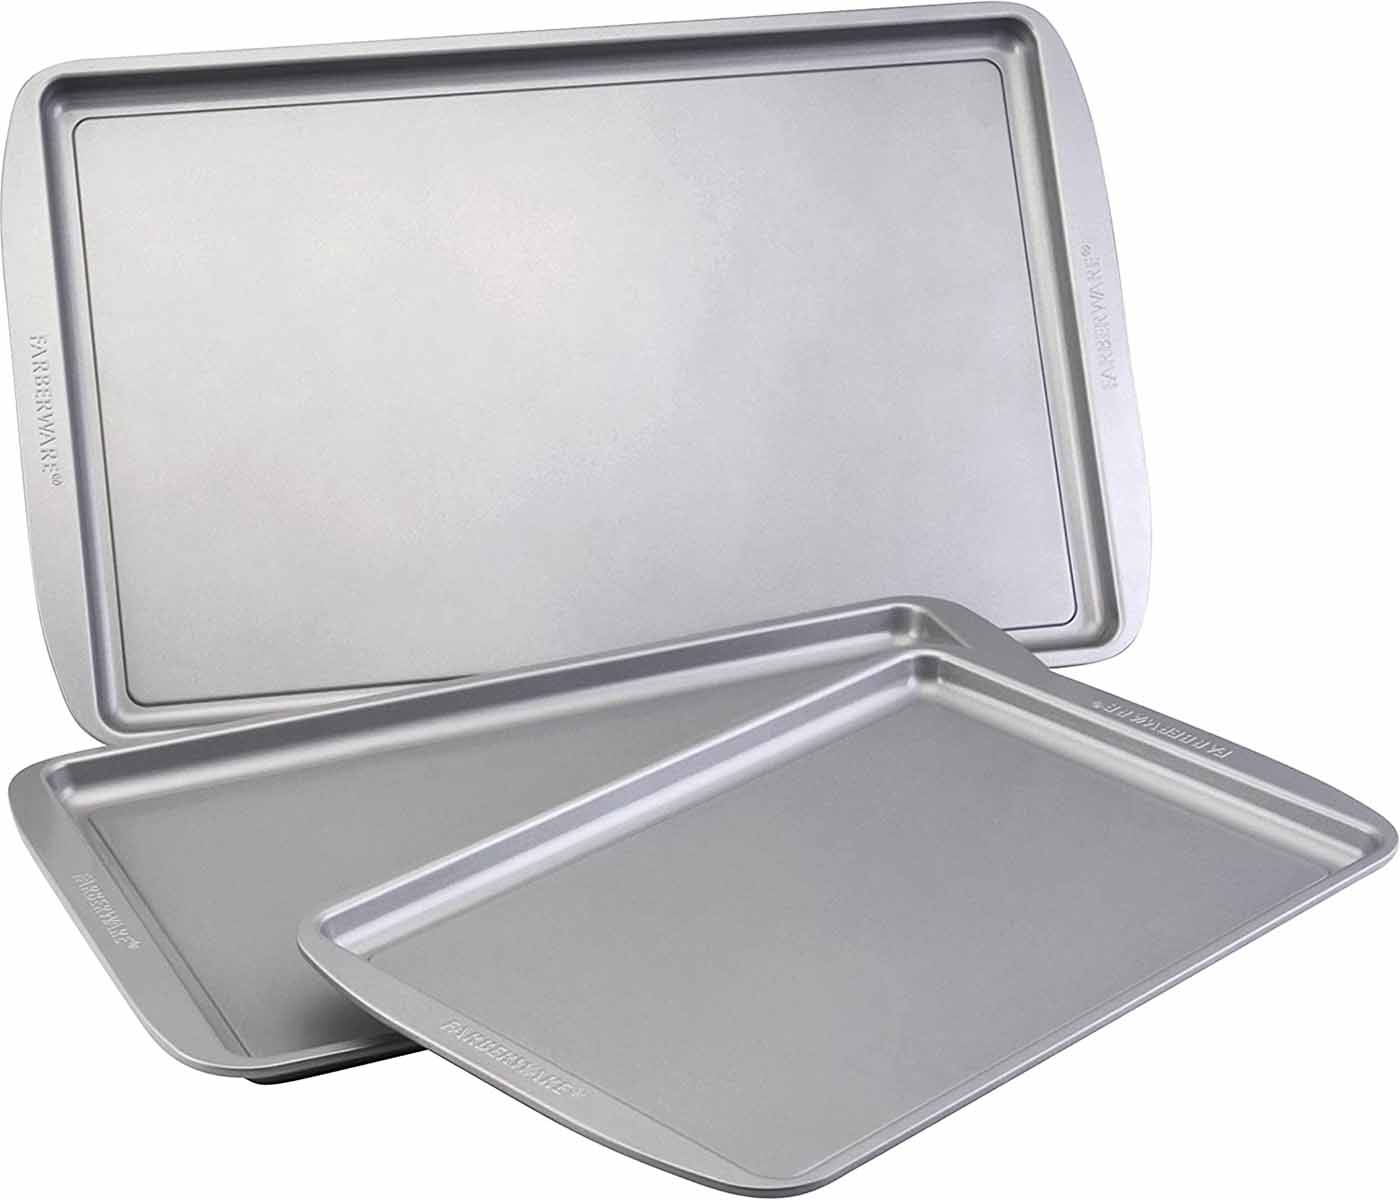 Gray 13 x 9 inch All-Clad Pro-Release Nonstick Bakeware Quarter Sheet Pan